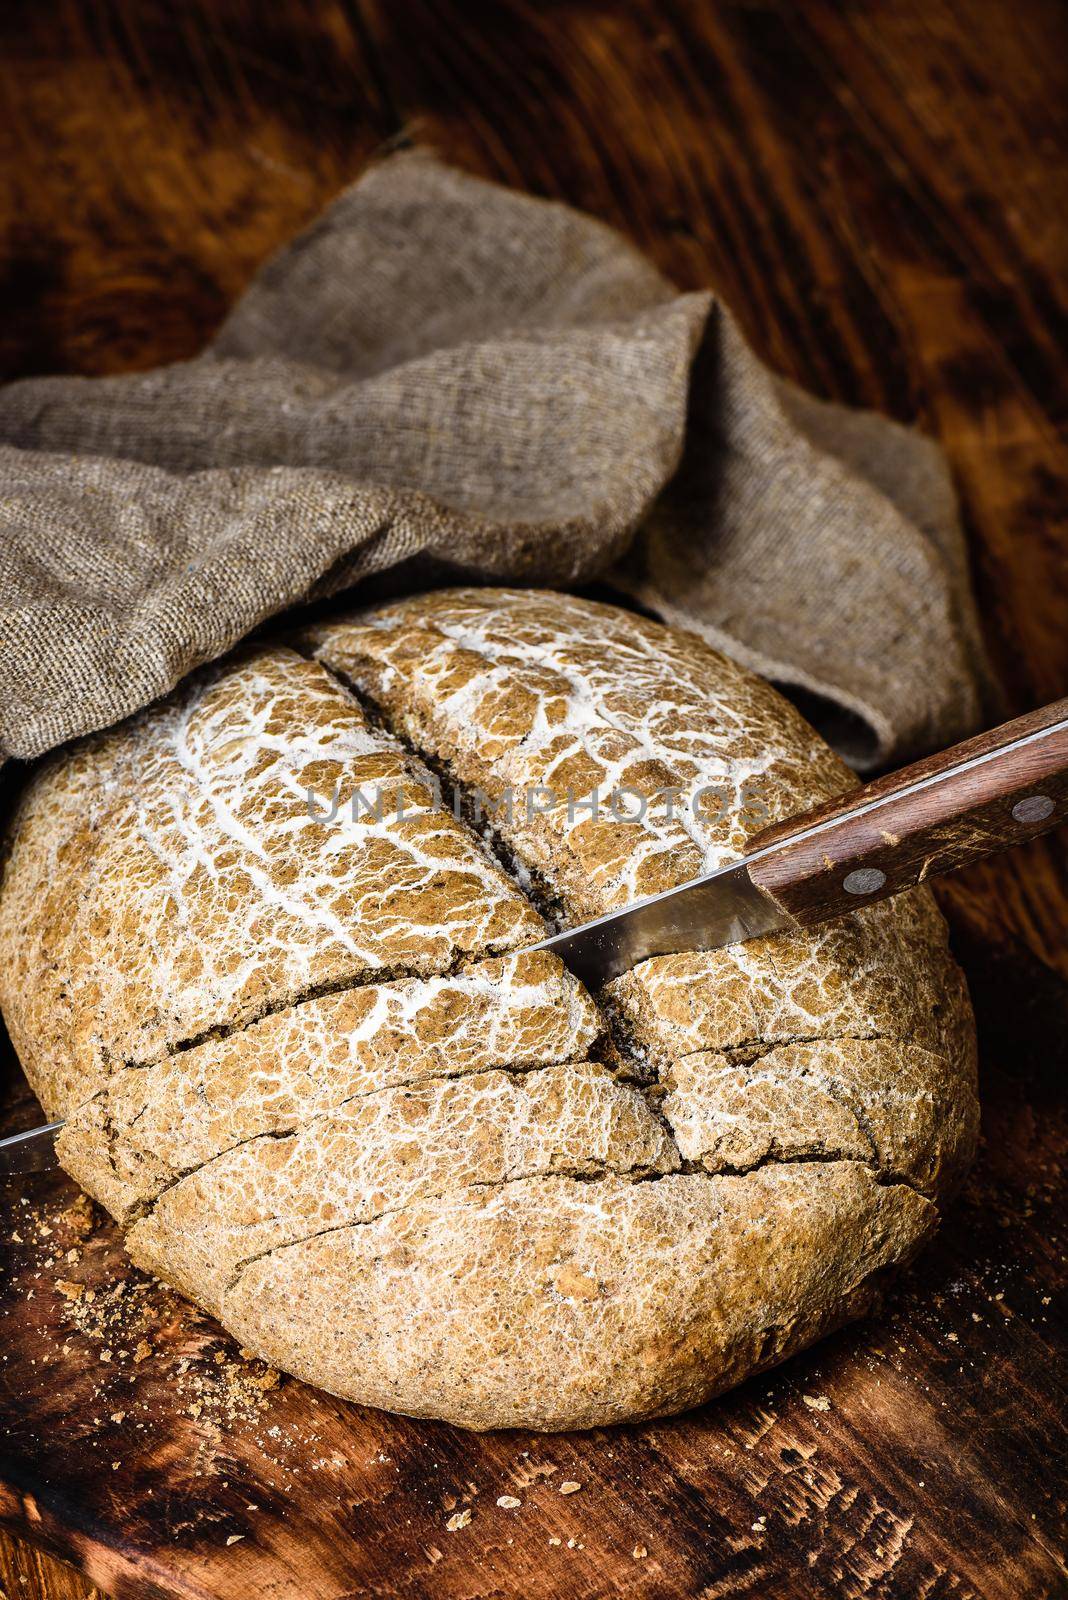 Slices of home baked rye bread by Seva_blsv